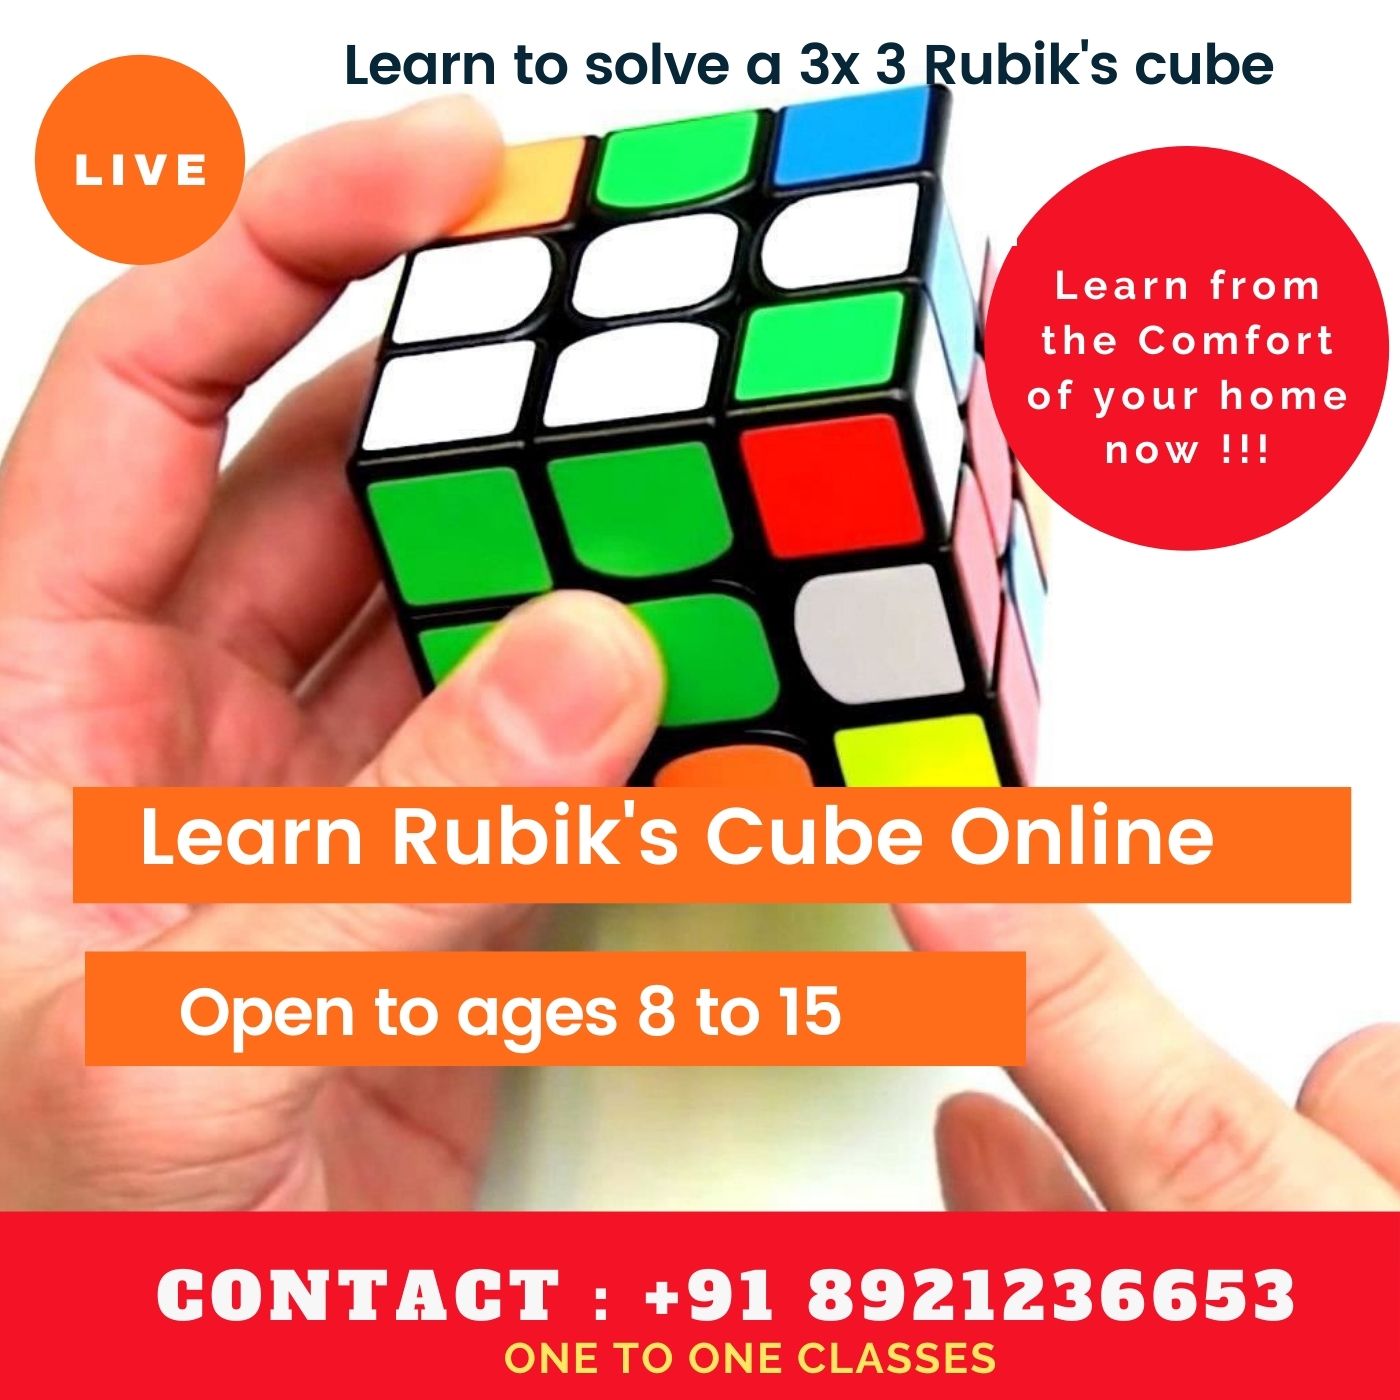 ONLINE RUBIK'S CUBE WORKSHOP FOR BEGINNERS, Online Event